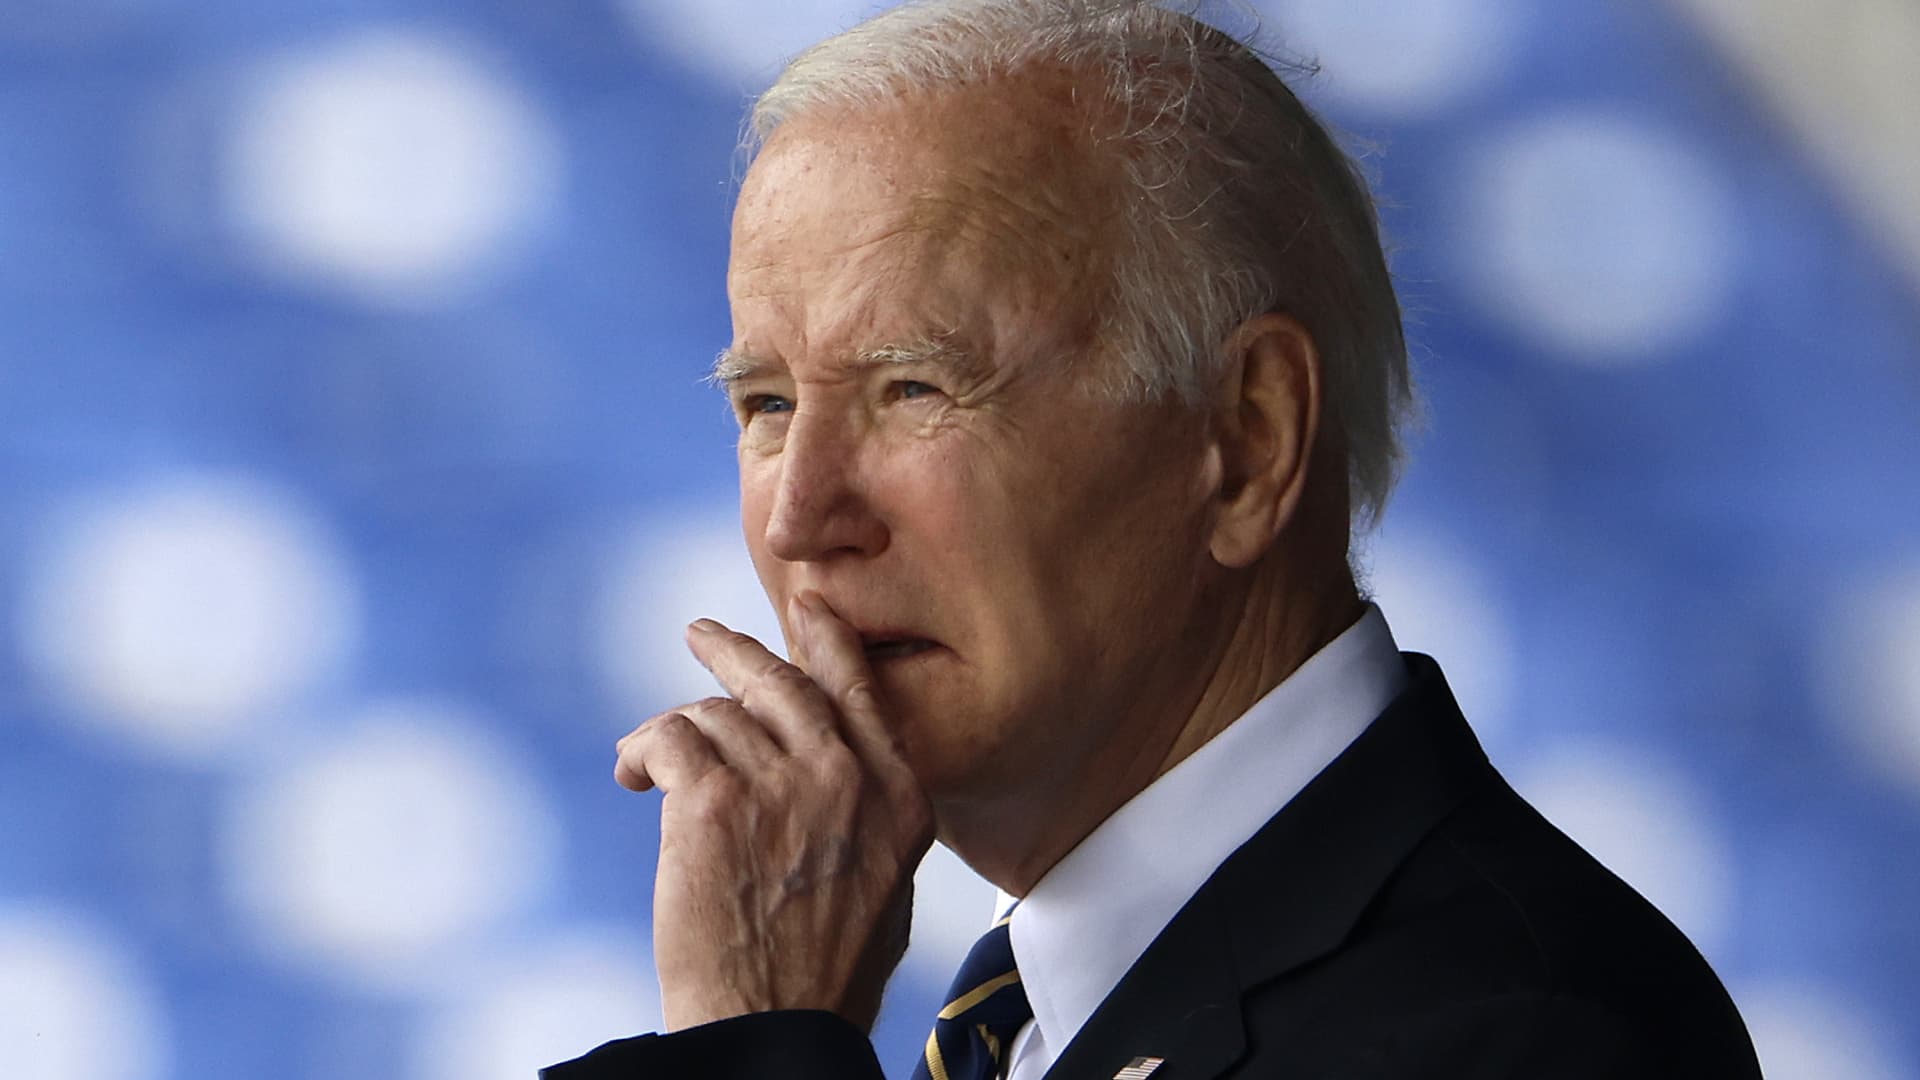 President Joe Biden says young people need these 3 leadership skills to change the world